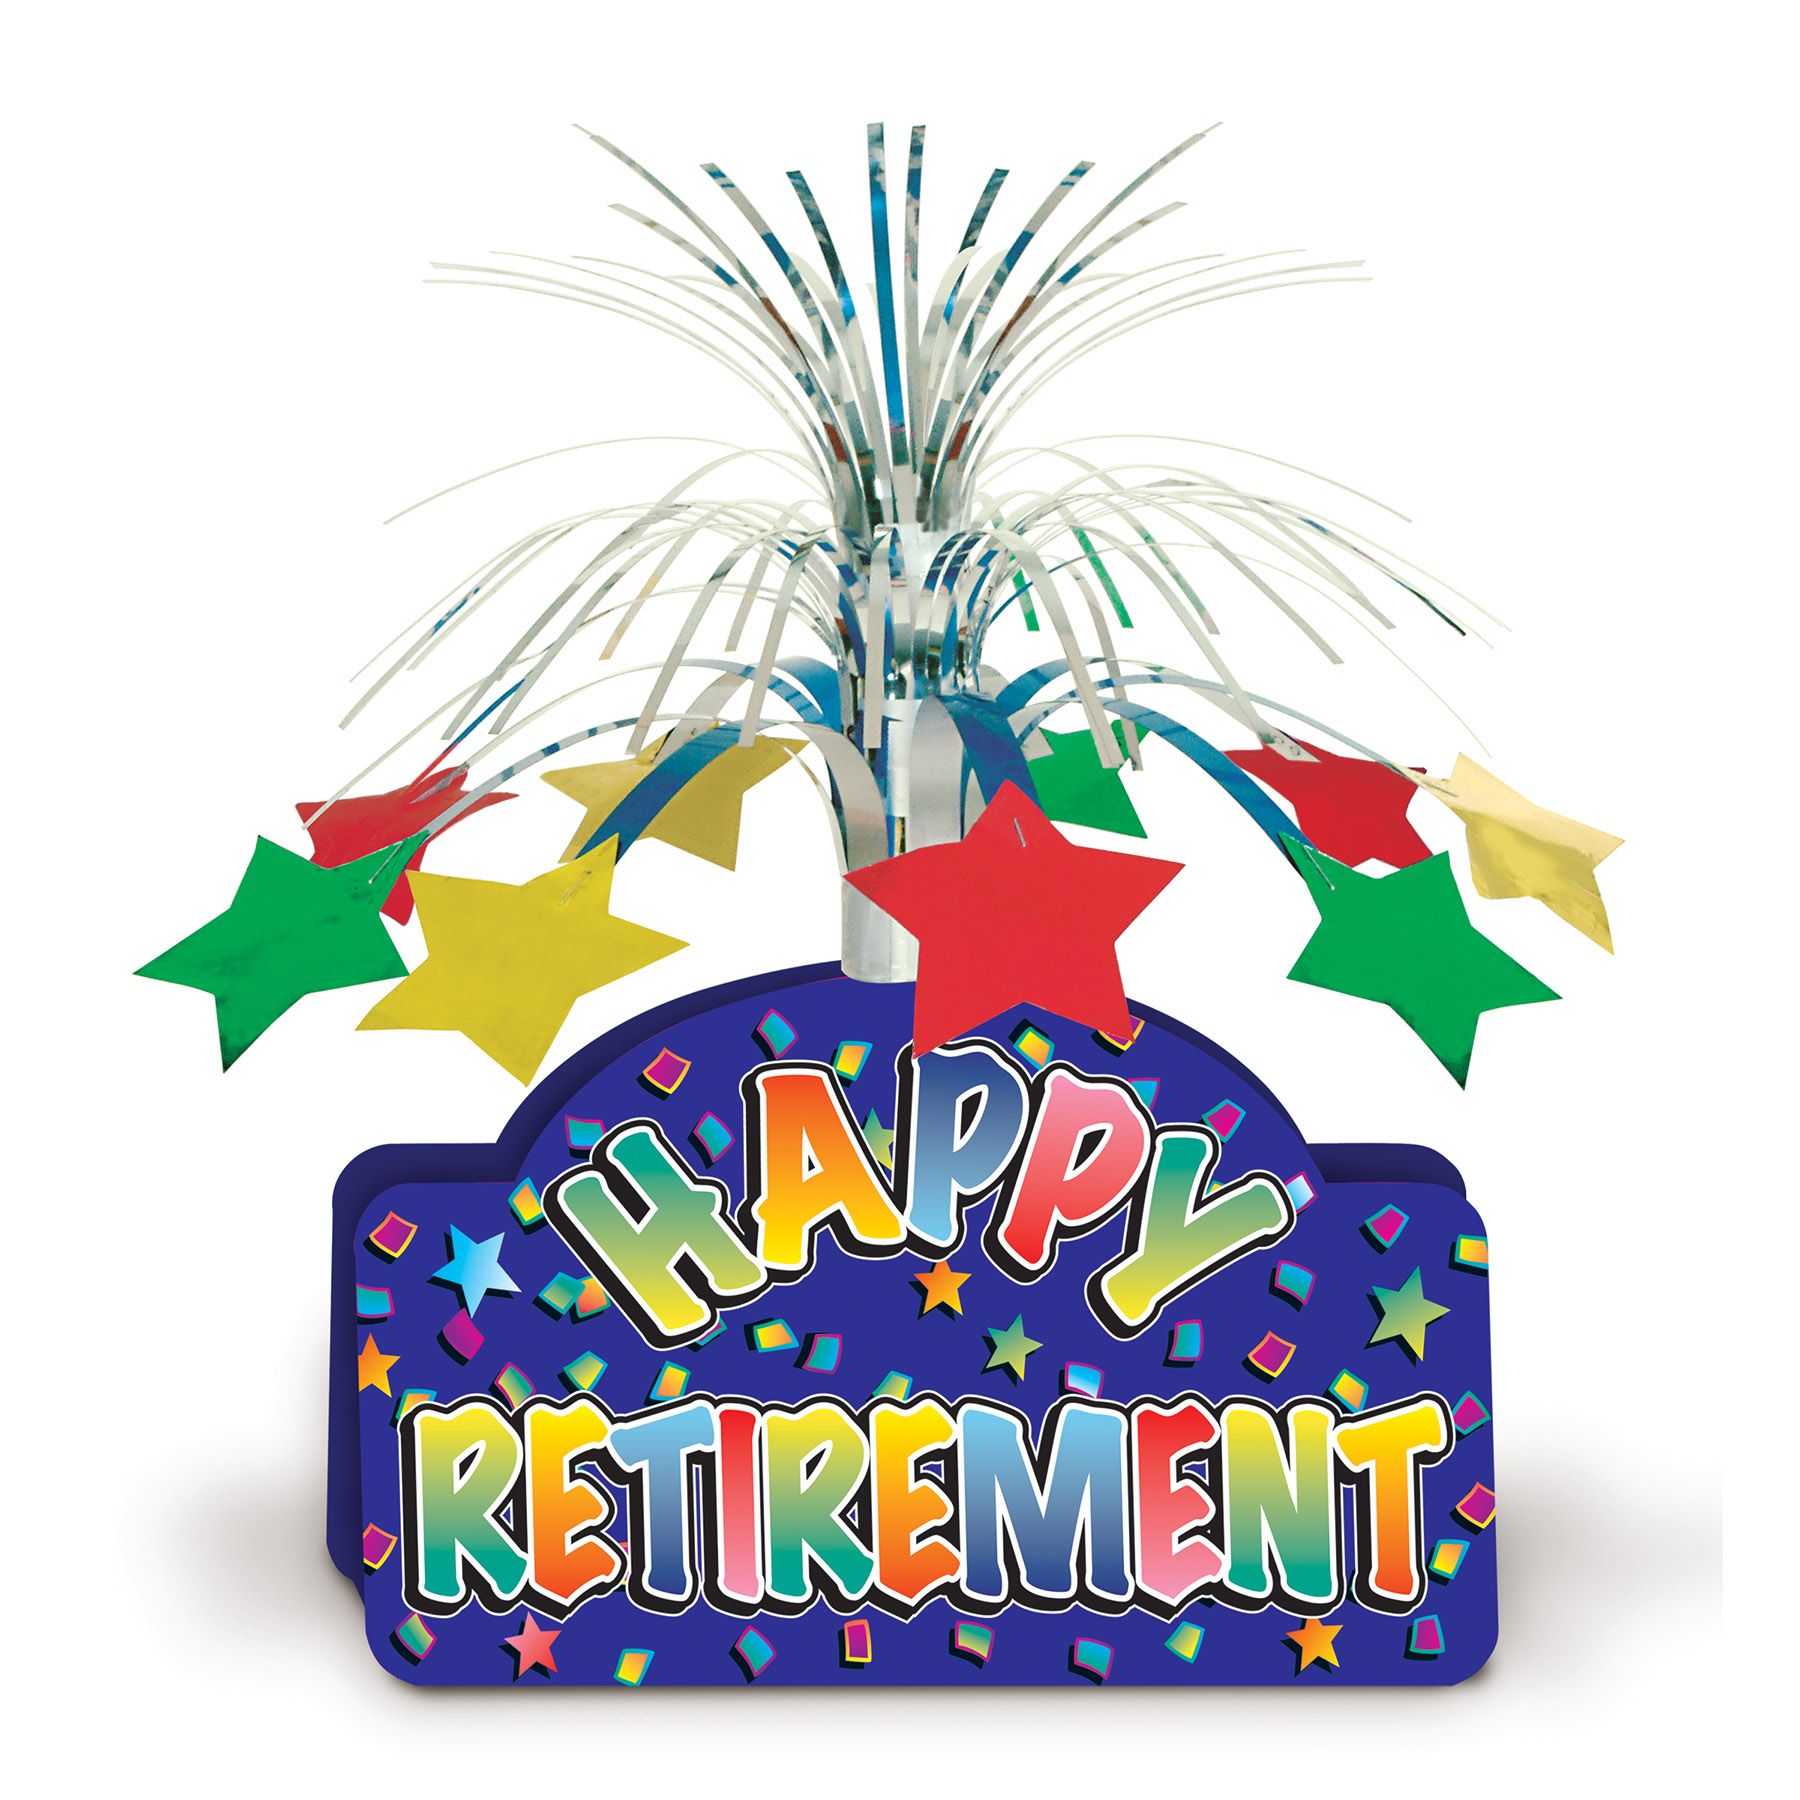 Happy Retirement Centerpiece